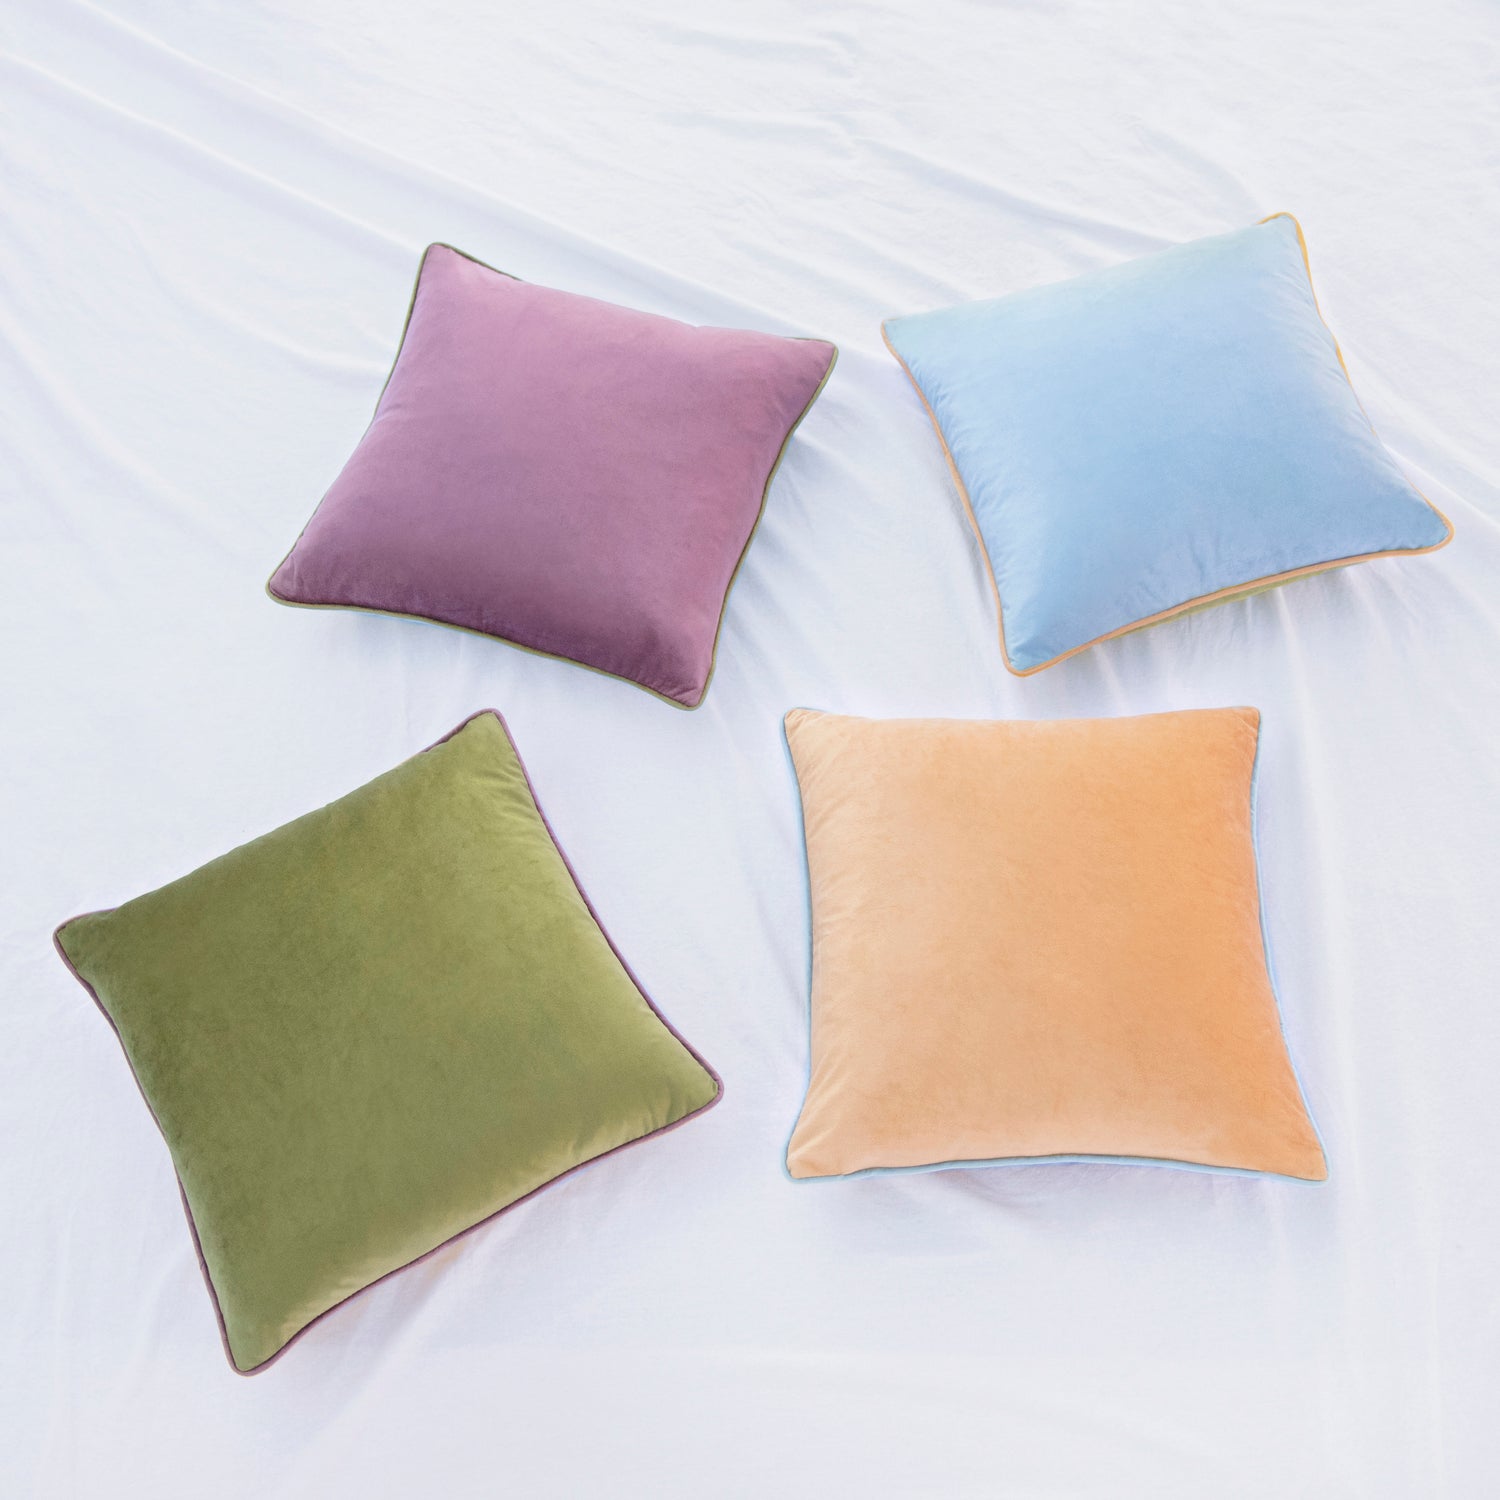 Monteverde Pillows (4-Pack) - Brown/Beige, Monday Moose